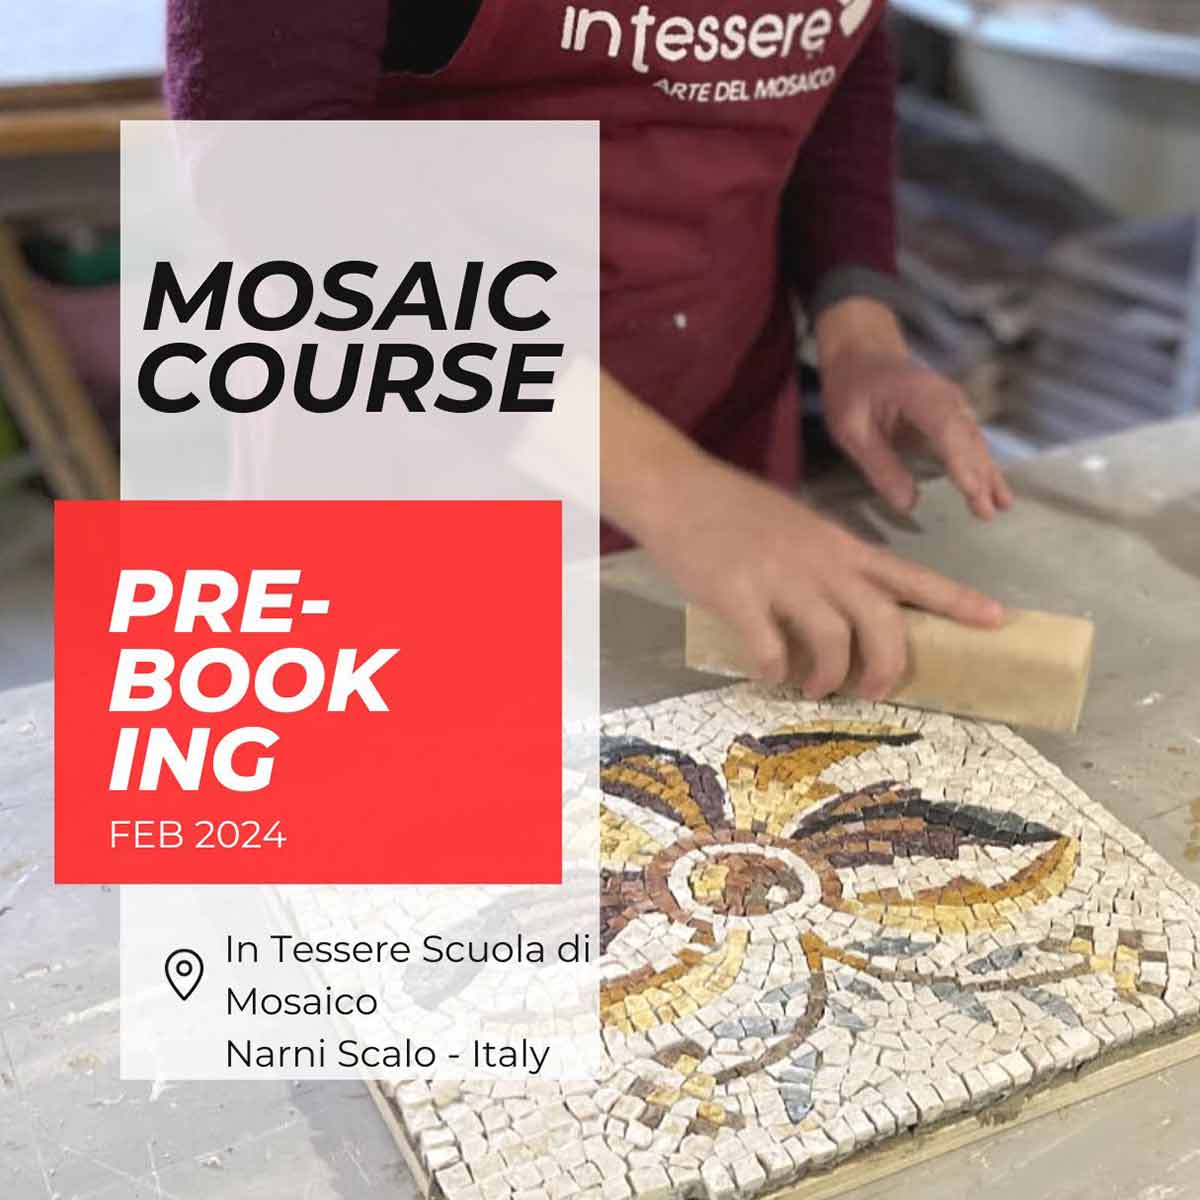 Enrollment fee for mosaic course